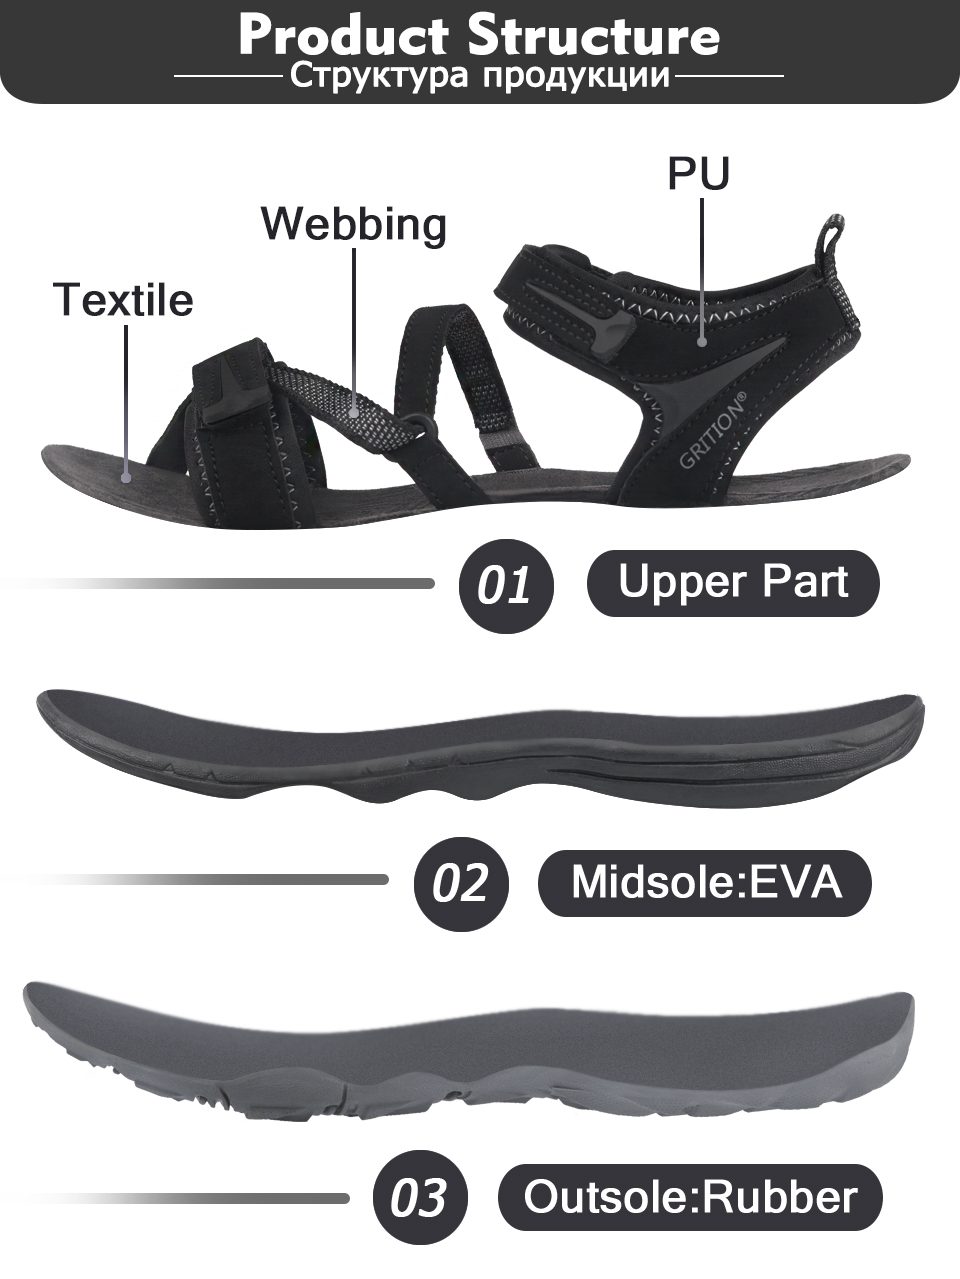 GRITION Women Sandals 2020 Outdoor Adjustable Webbing Beach Flat Shoes Ladies Lightweight Open Toe Sports Sandals Comfort Casual